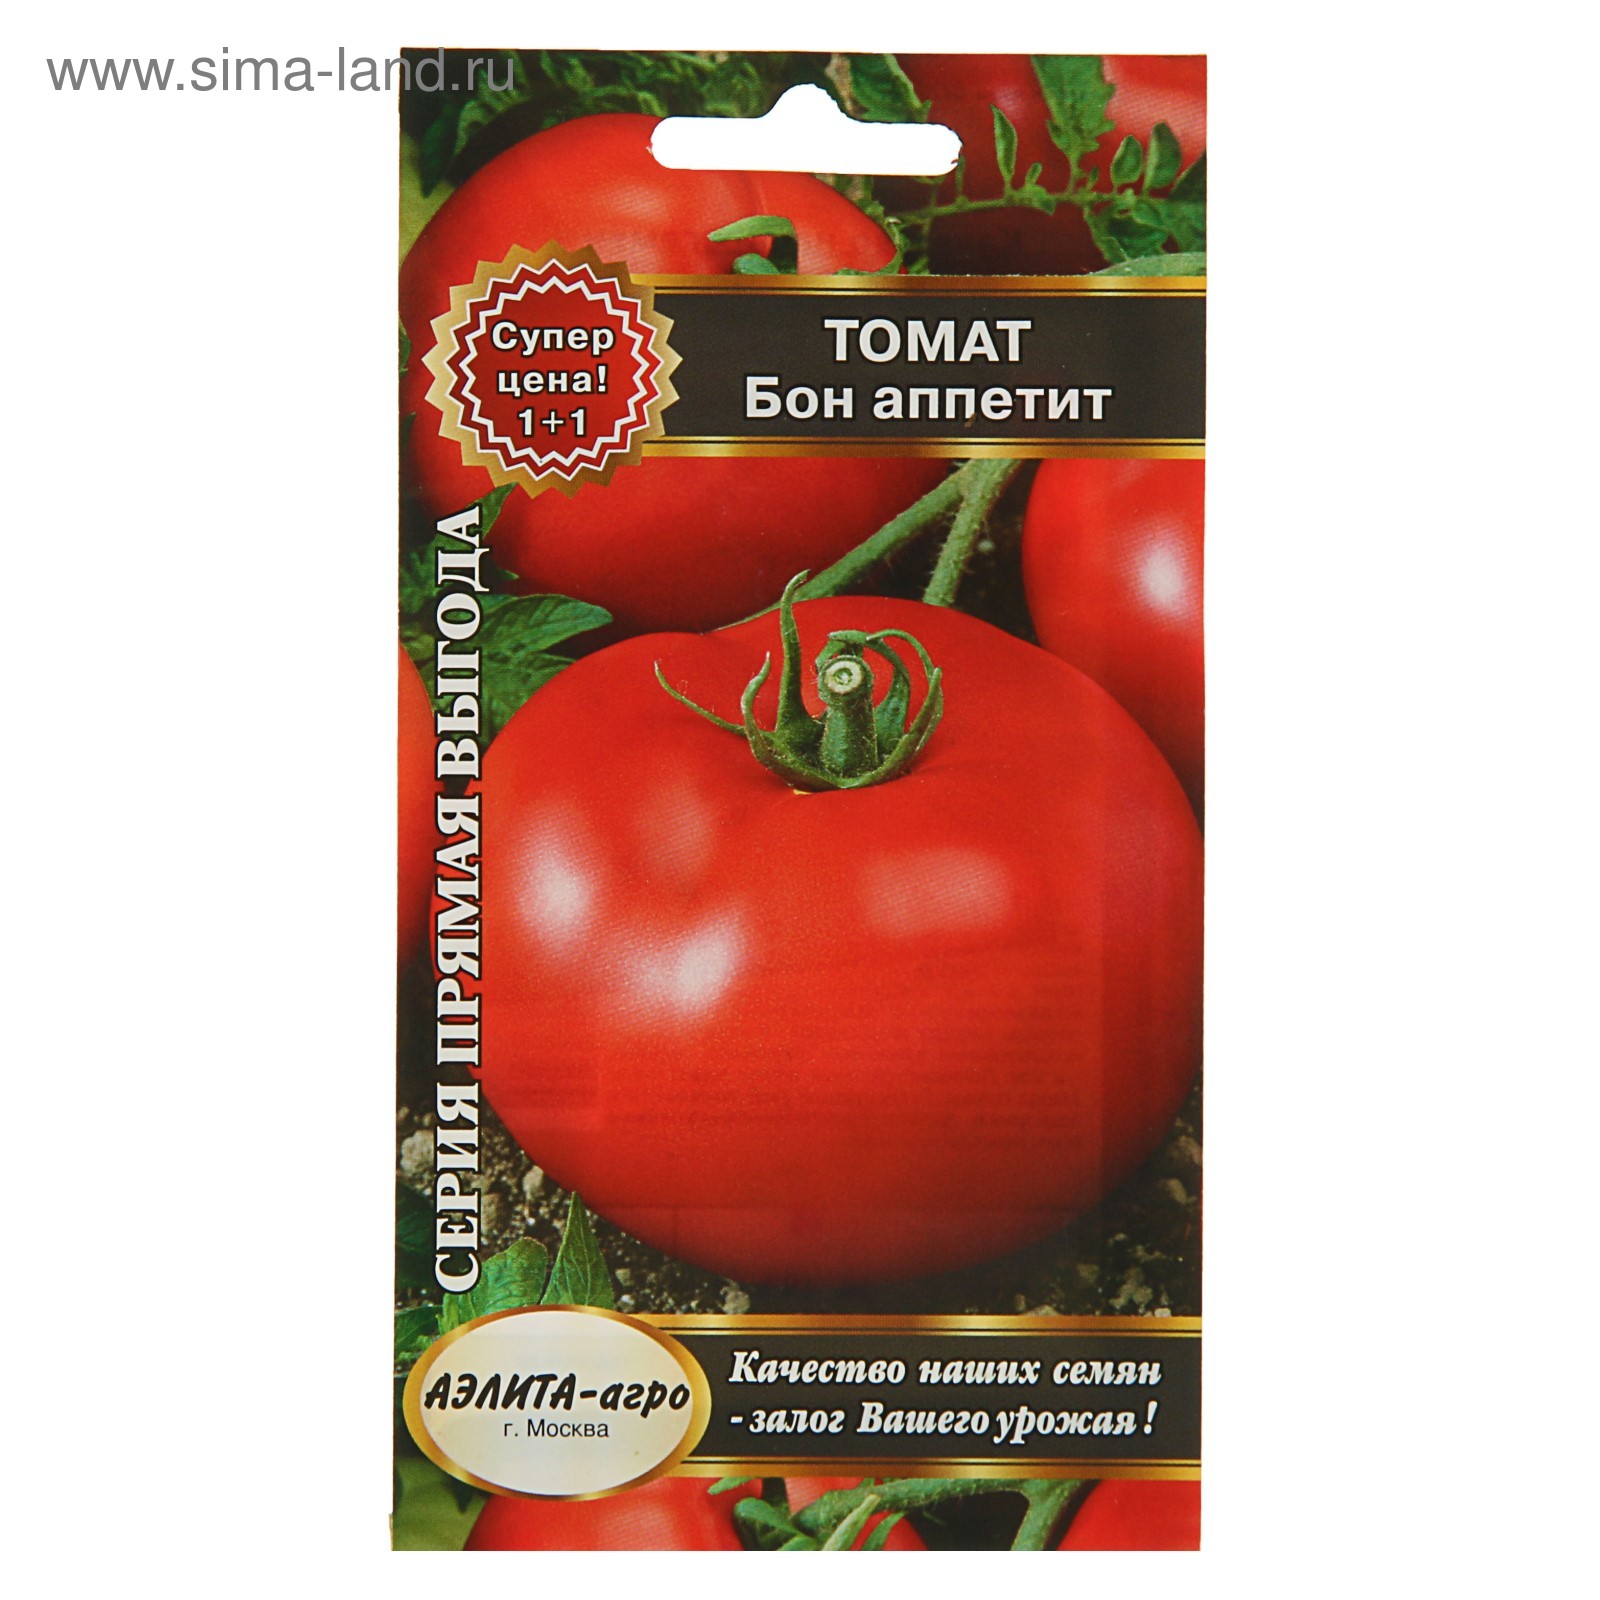 Сорт томата бони мм. Томат Бонапарт f1. Семена томат ультраскороспелый. Томаты Бони раннеспелый. Томат Бон аппетит.